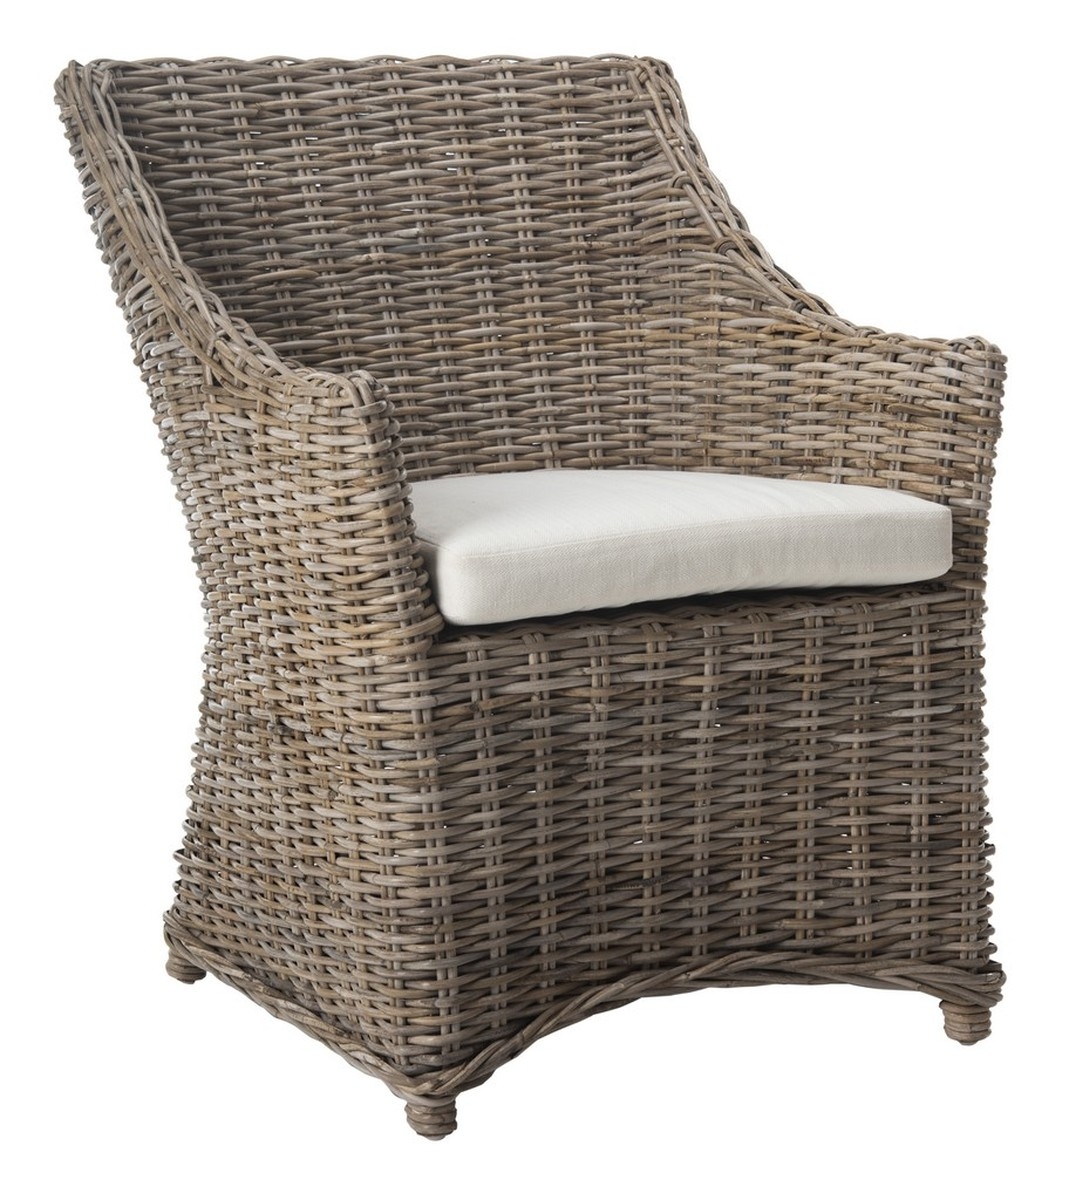 Ventura Rattan Arm Chair - Brown/White - Safavieh - Image 1